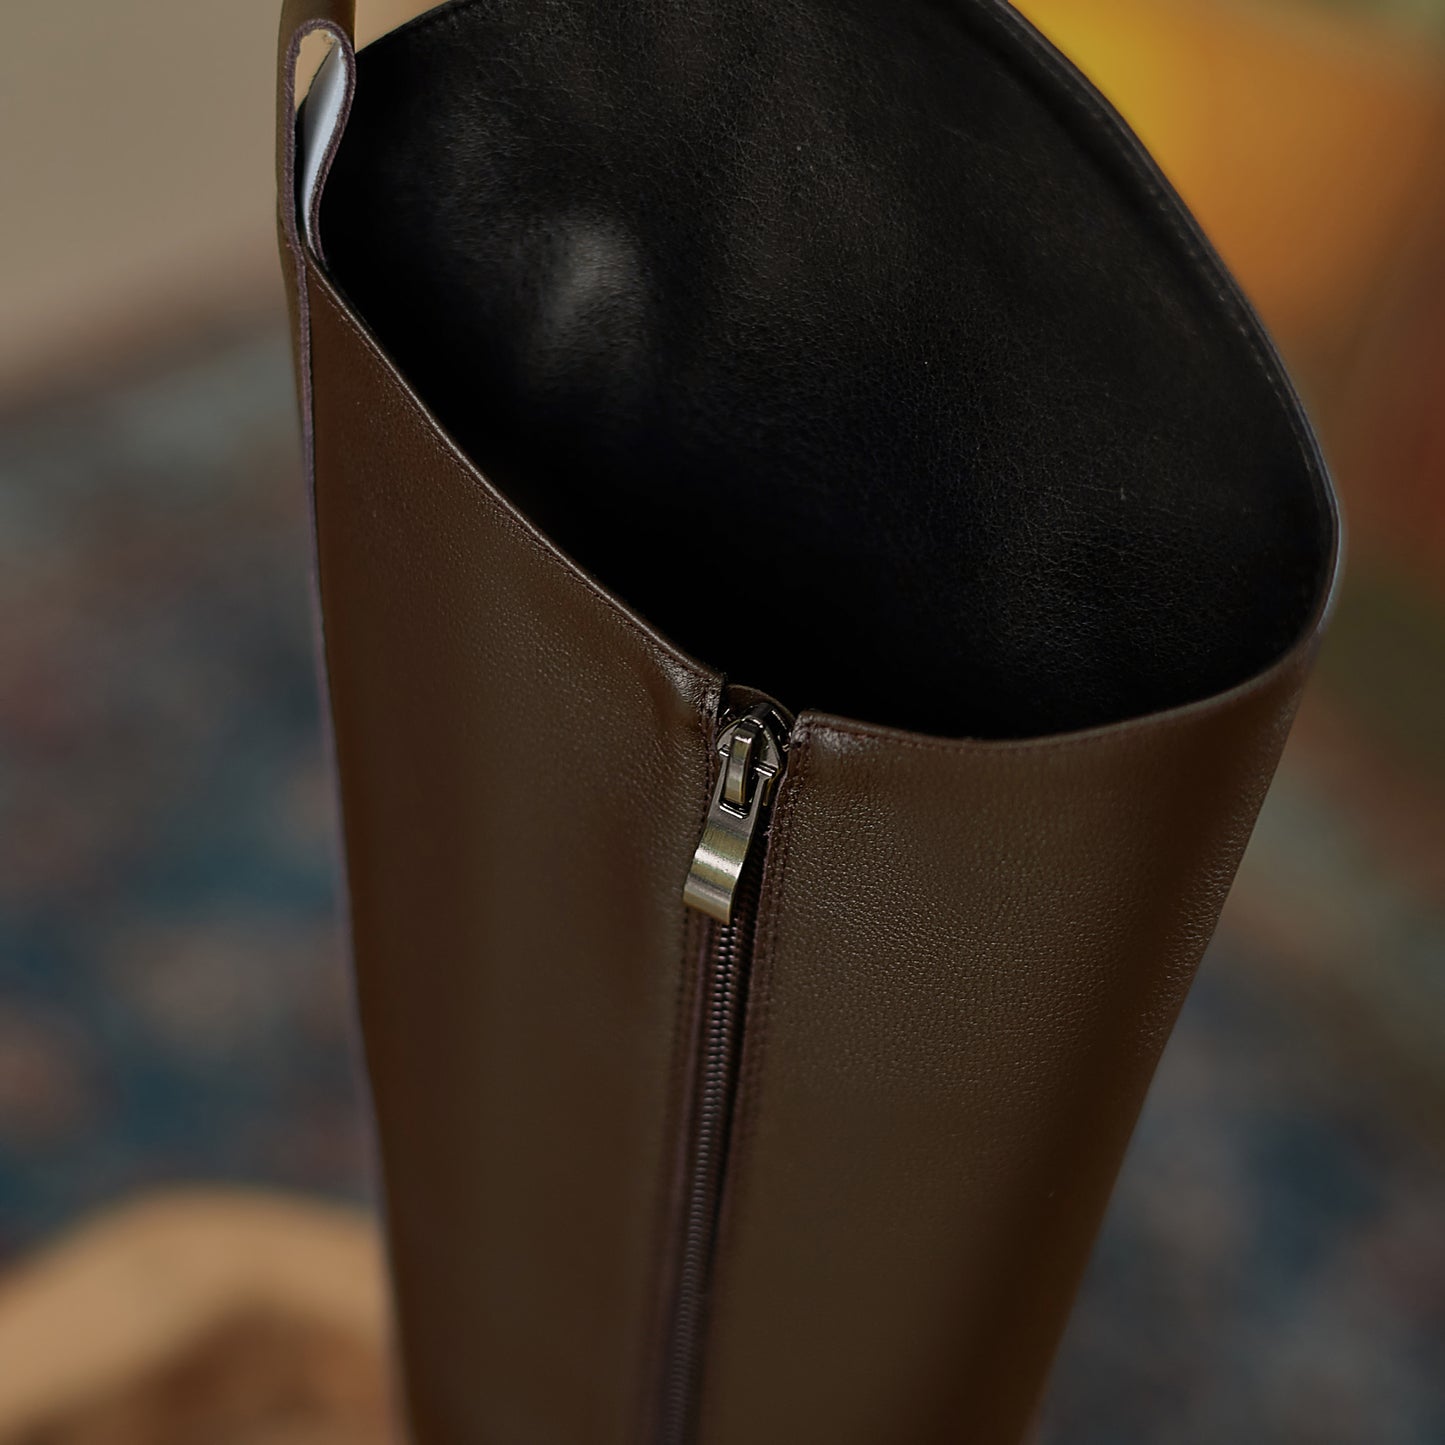 TinaCus Women's Genuine Leather Round Toe Handmade Platform Side Zipper Chic Irregular Knight Boots